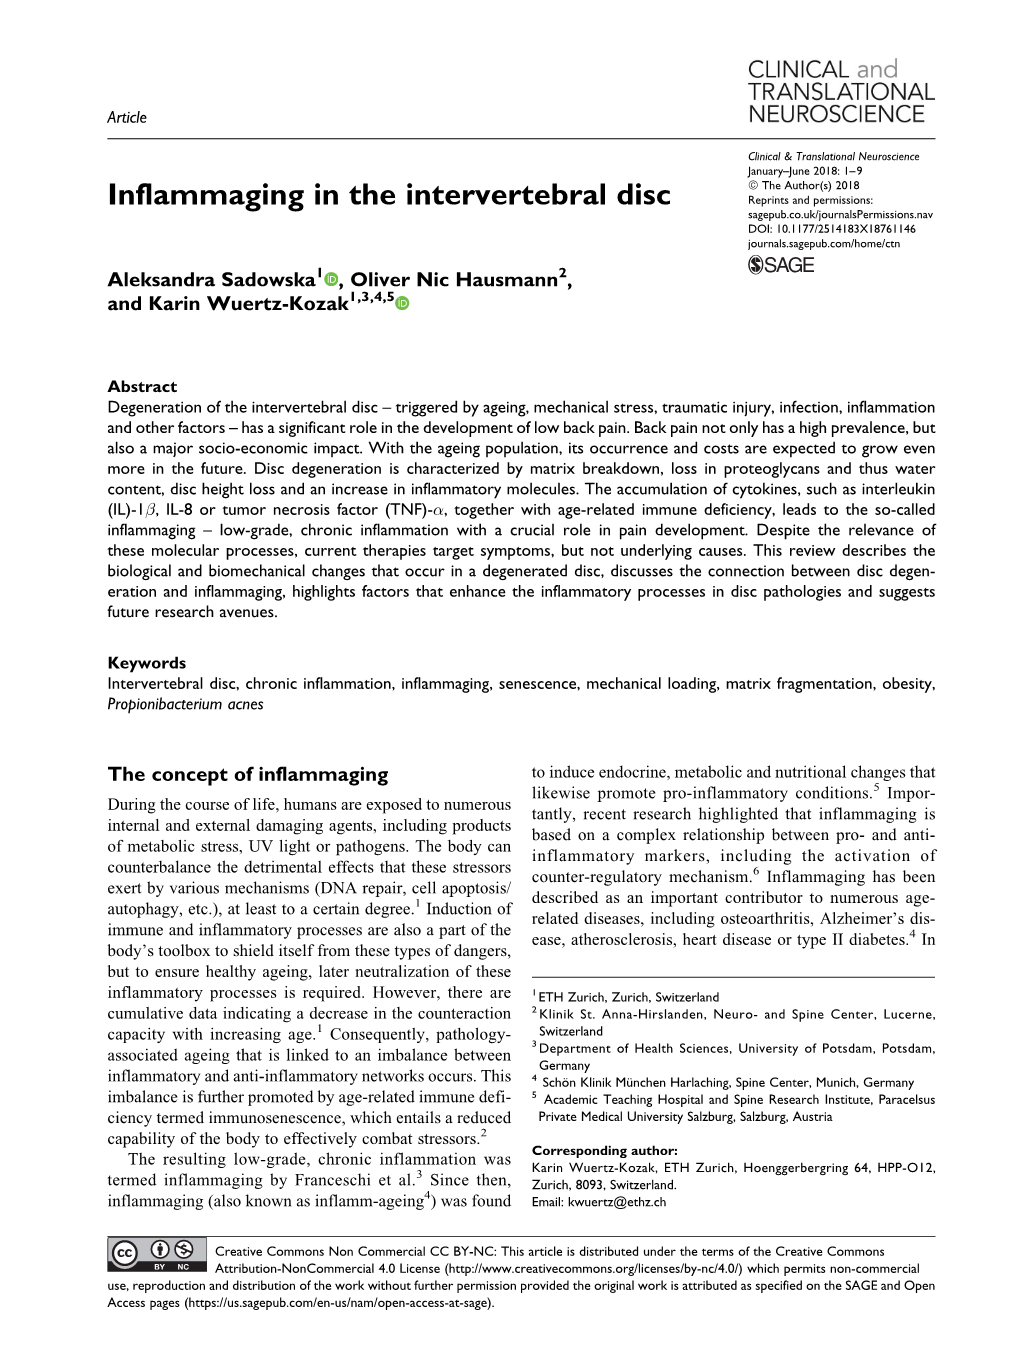 Inflammaging in the Intervertebral Disc